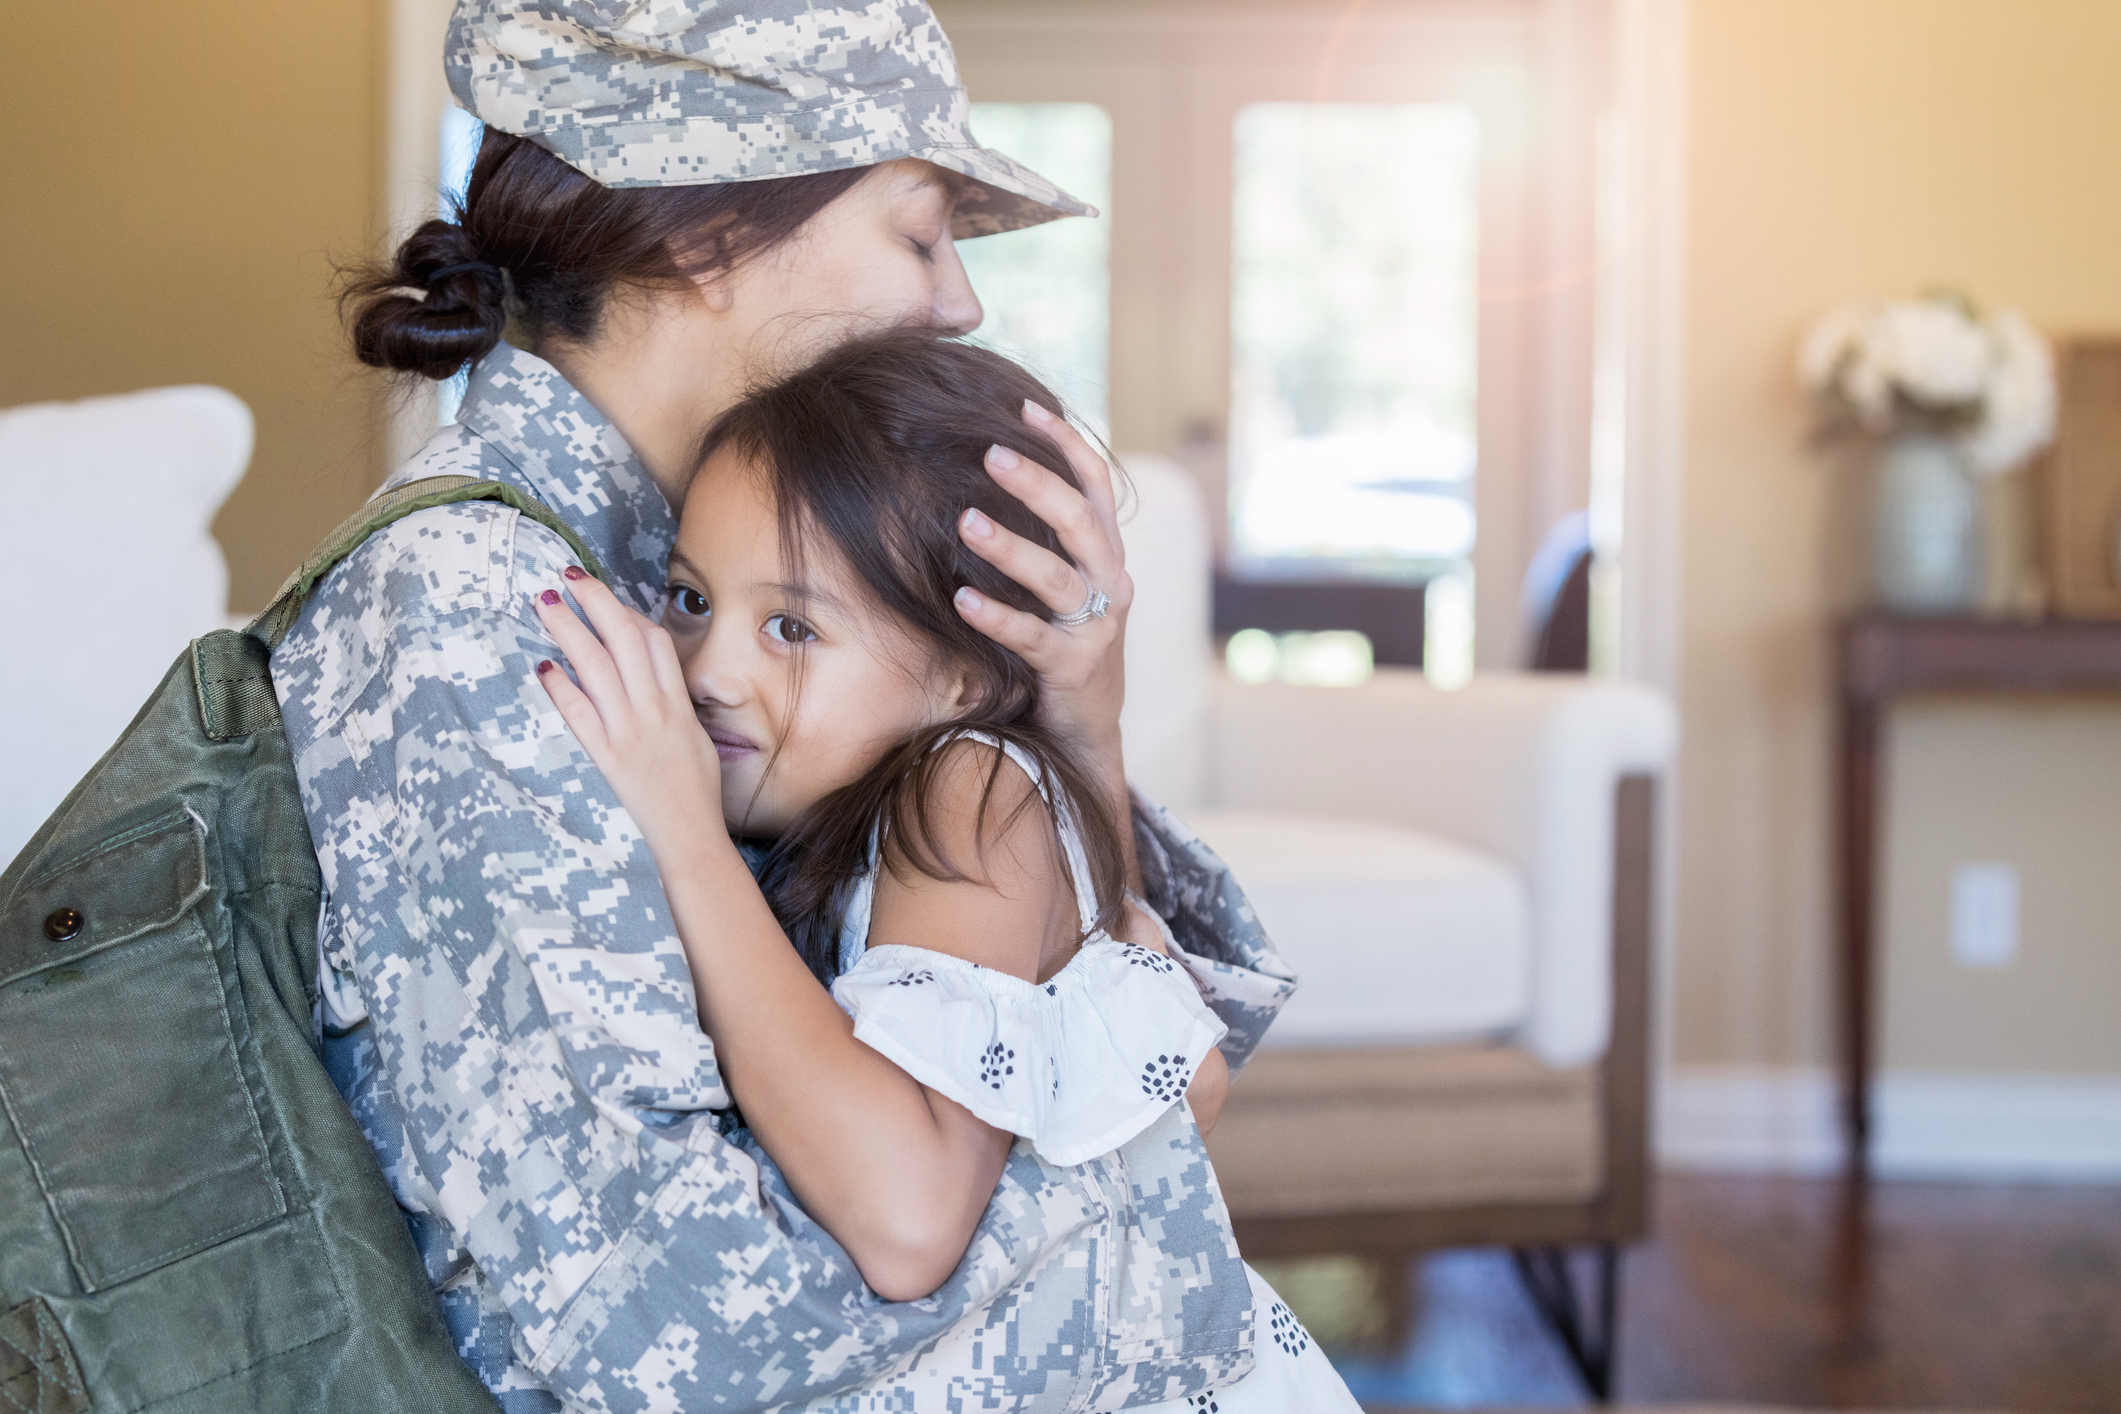 Upset female soldier hugs her little girl goodbye before leaving for long military assignment.